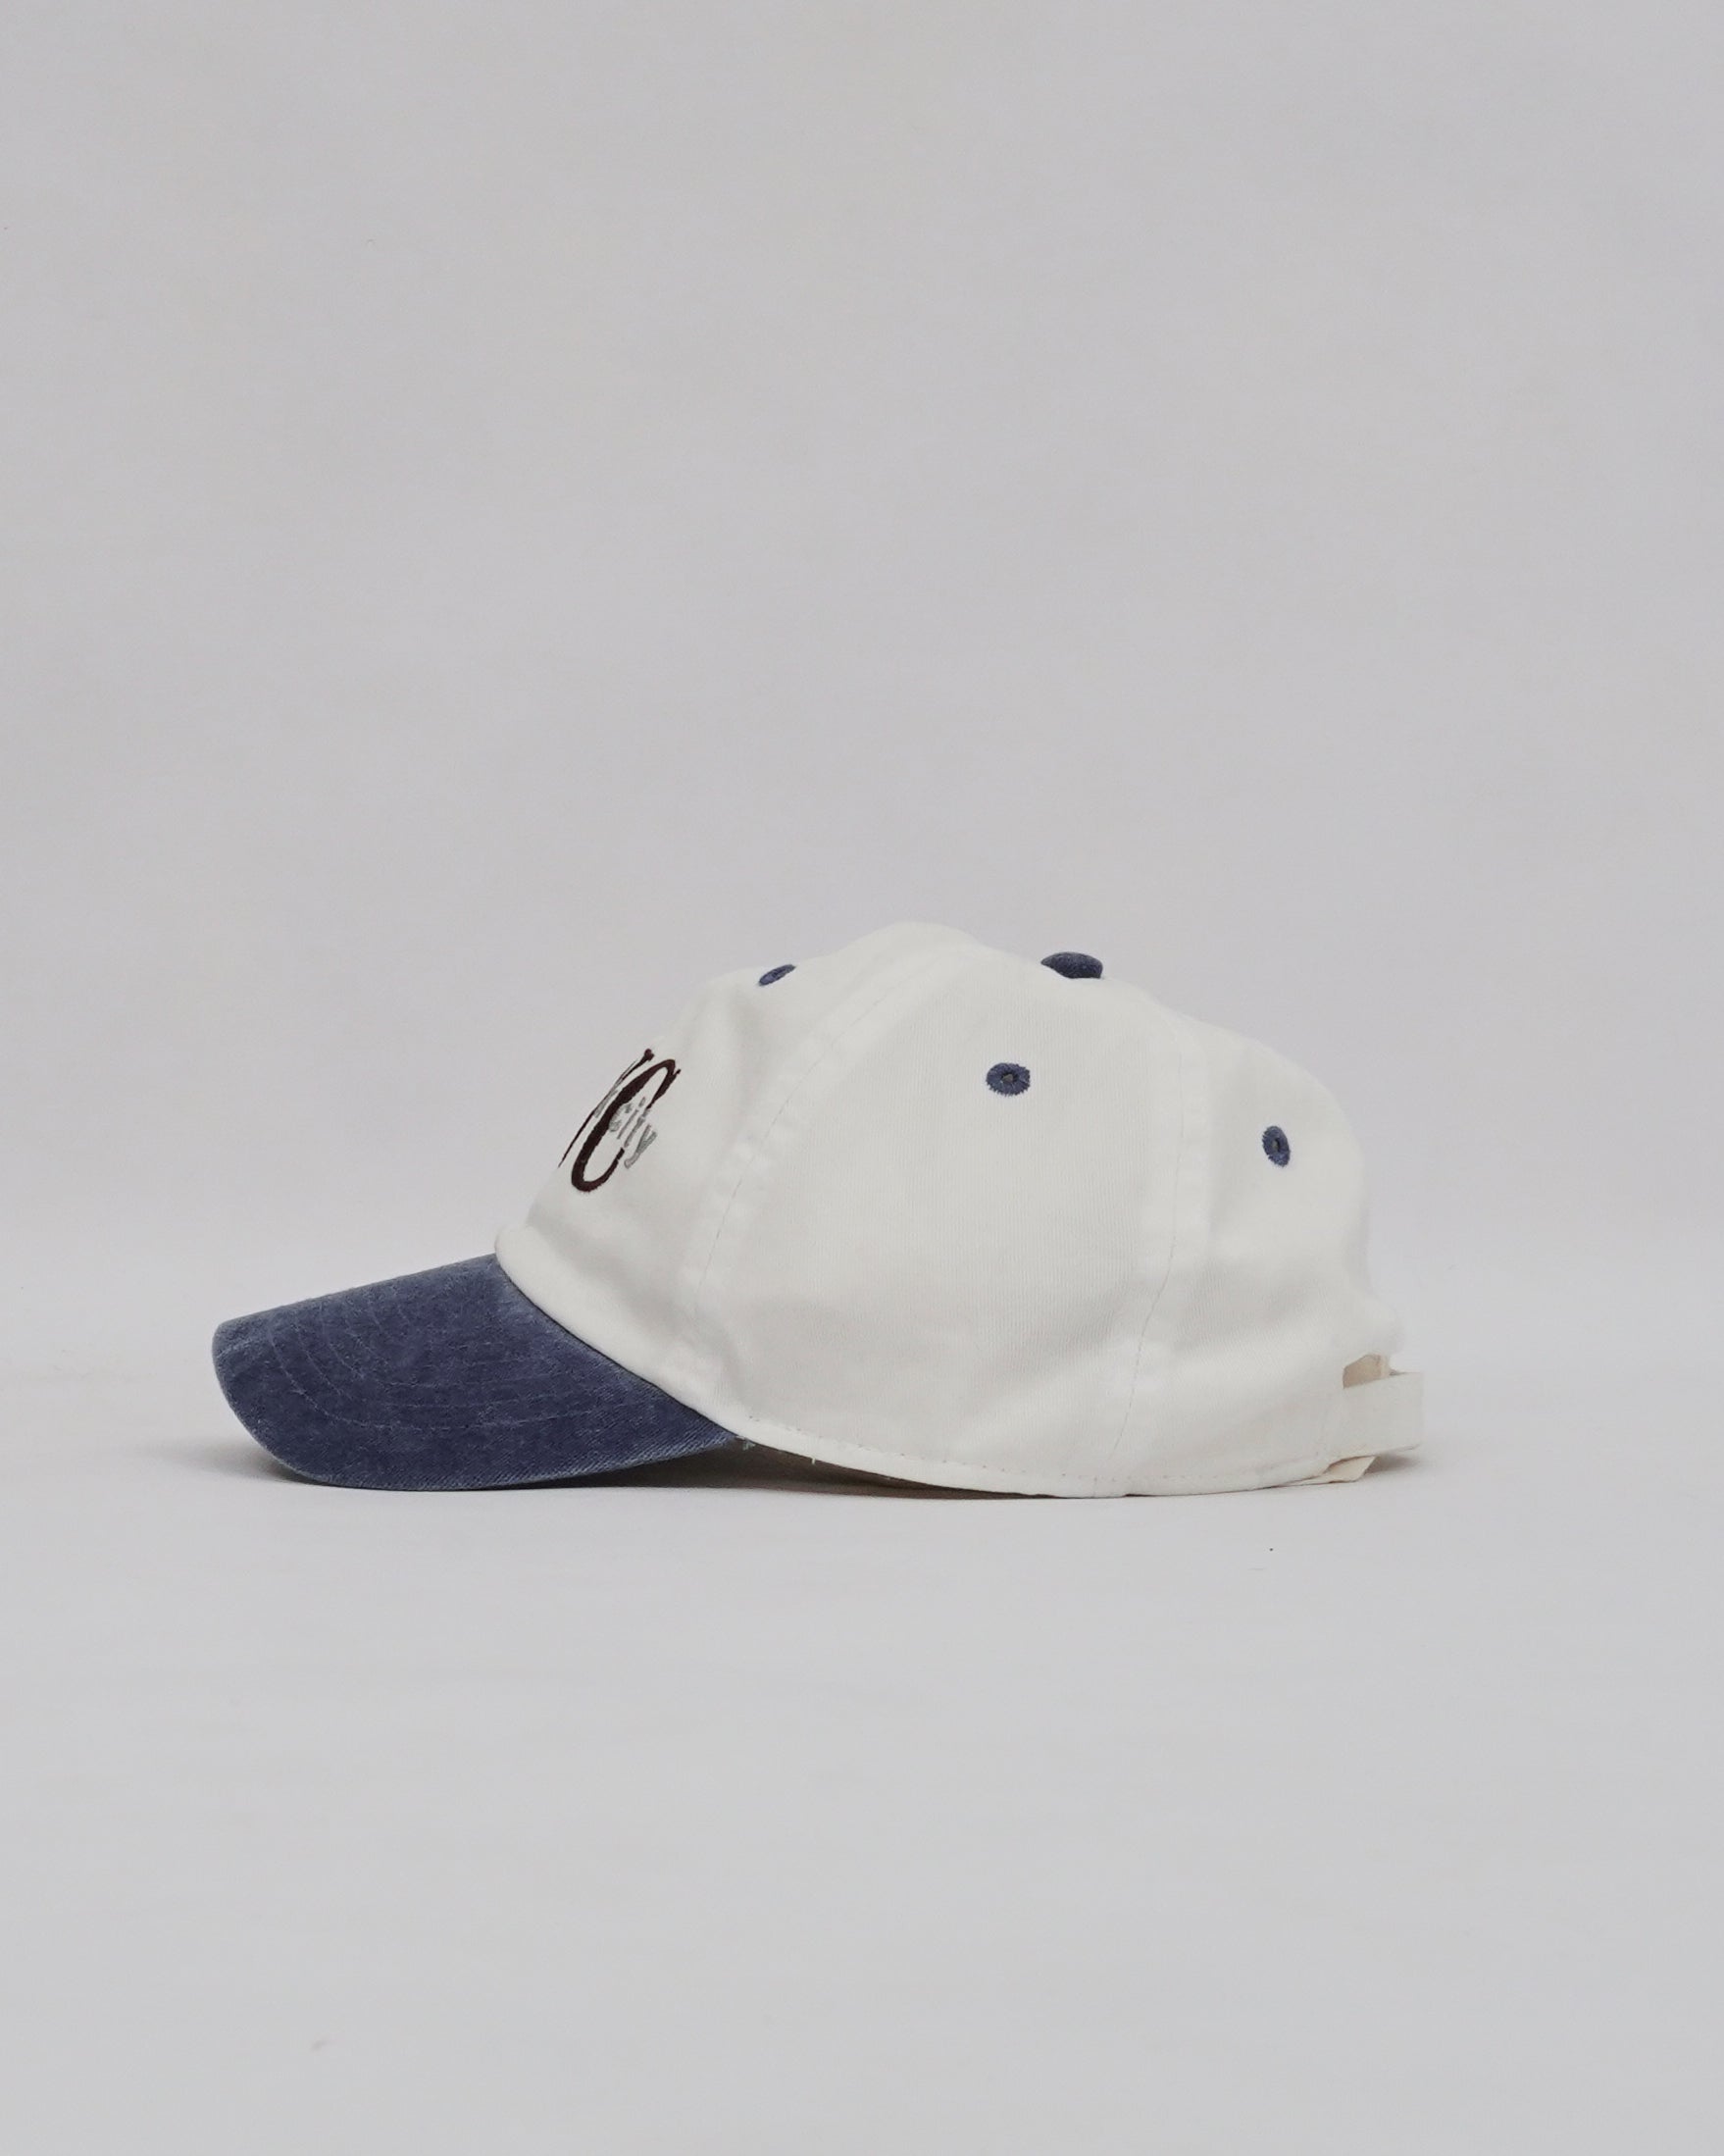 Cotton NYC Cap